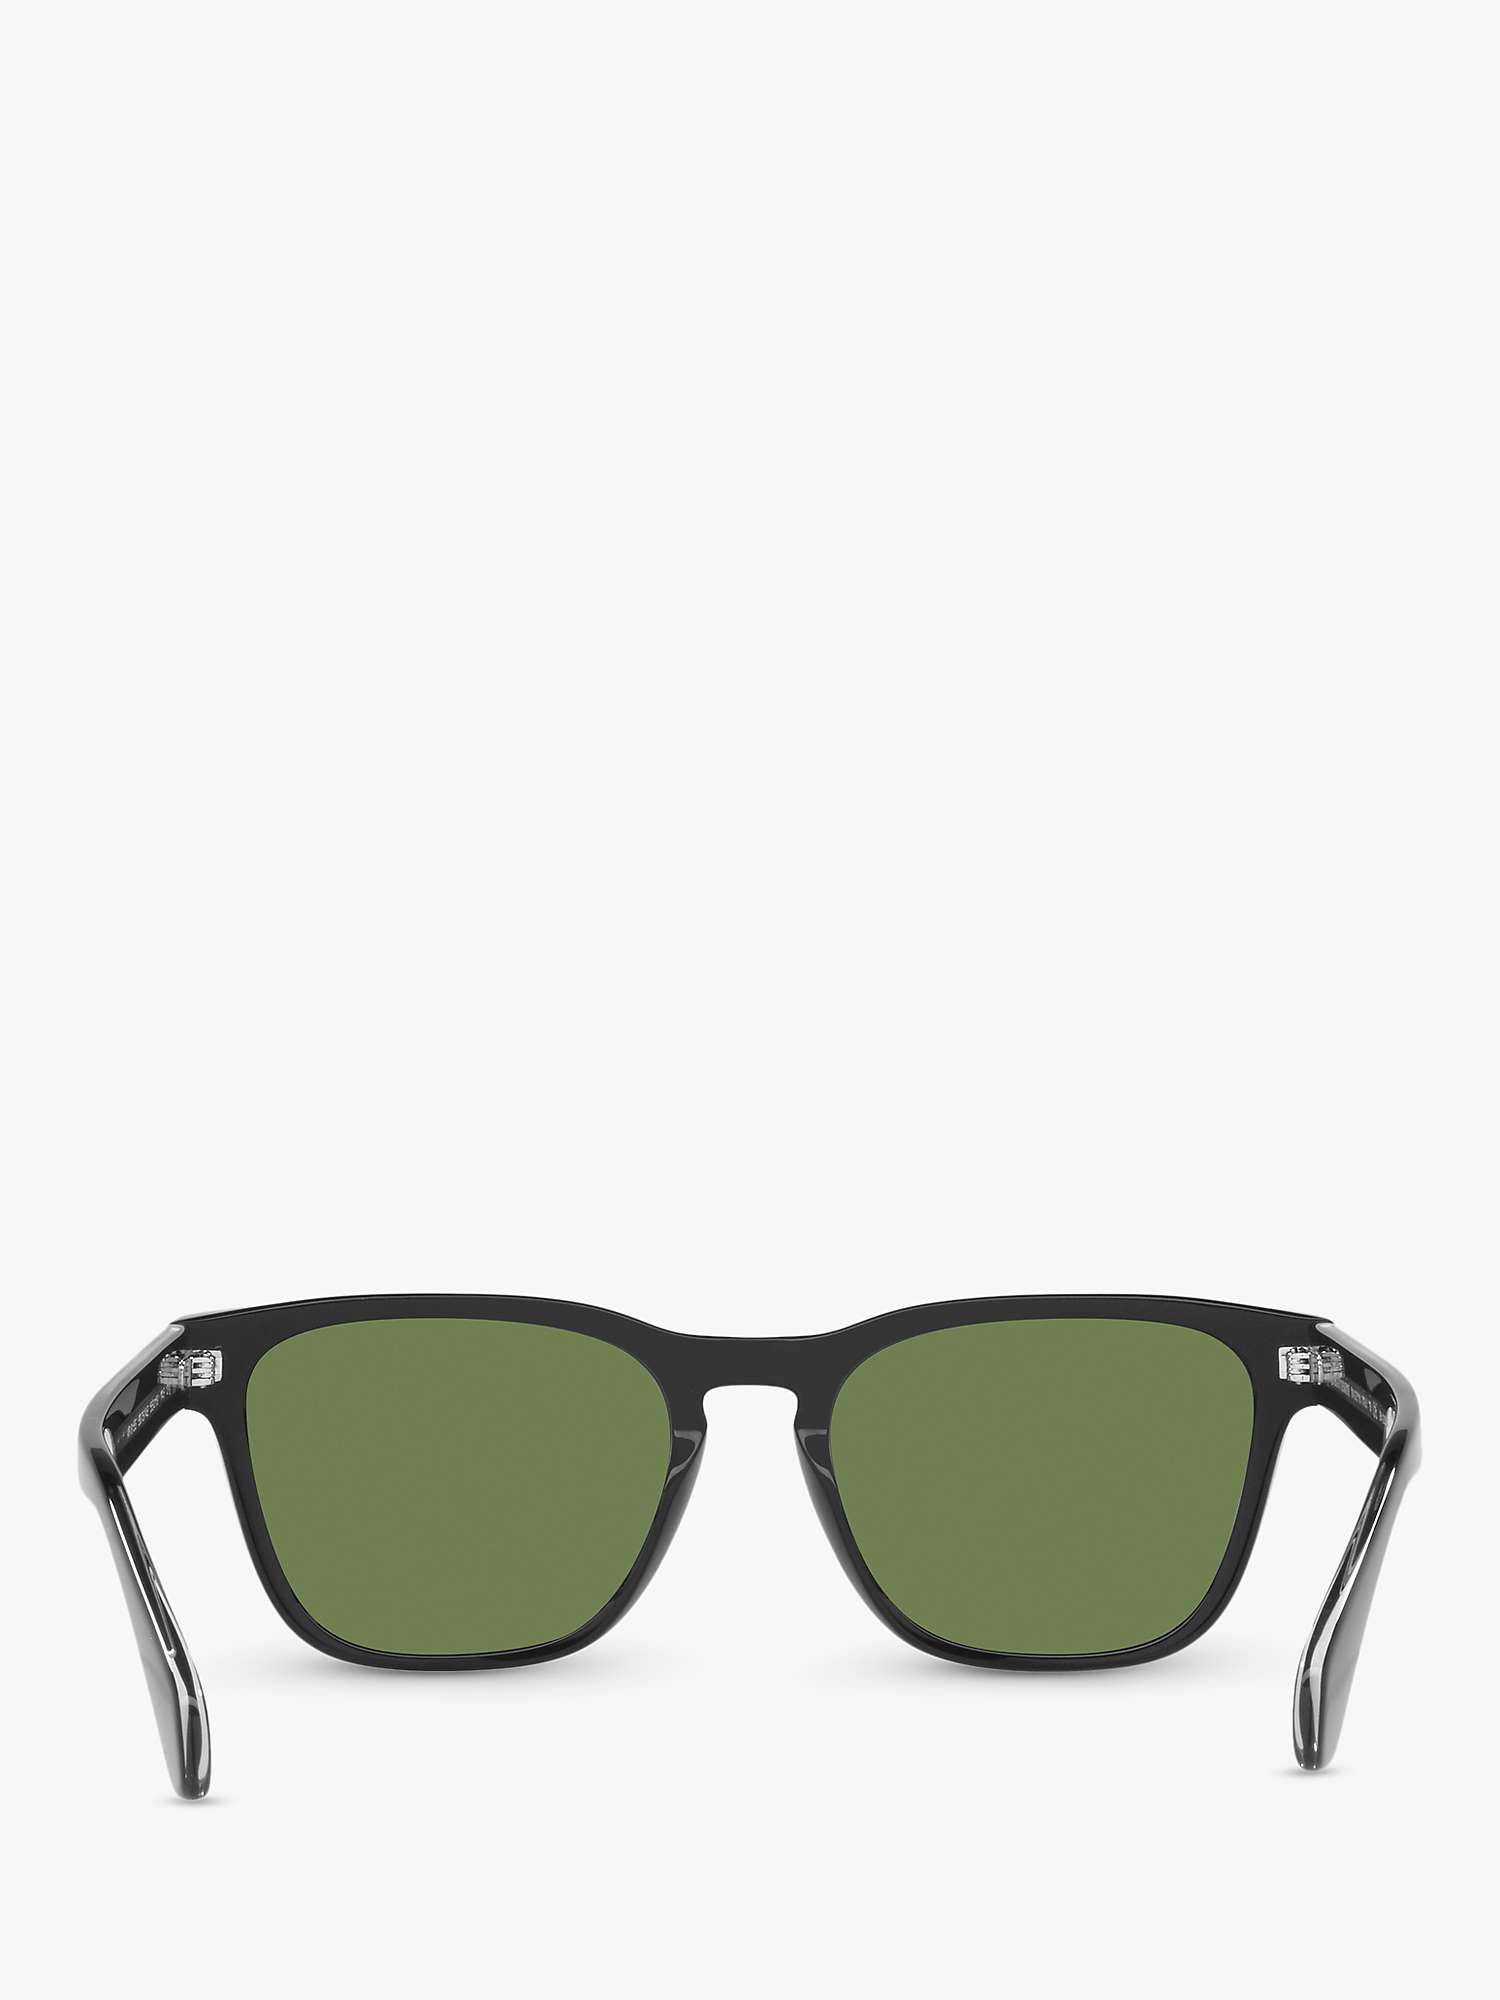 Buy Giorgio Armani AR8155 Men's D-Frame Sunglasses, Black/Green Online at johnlewis.com